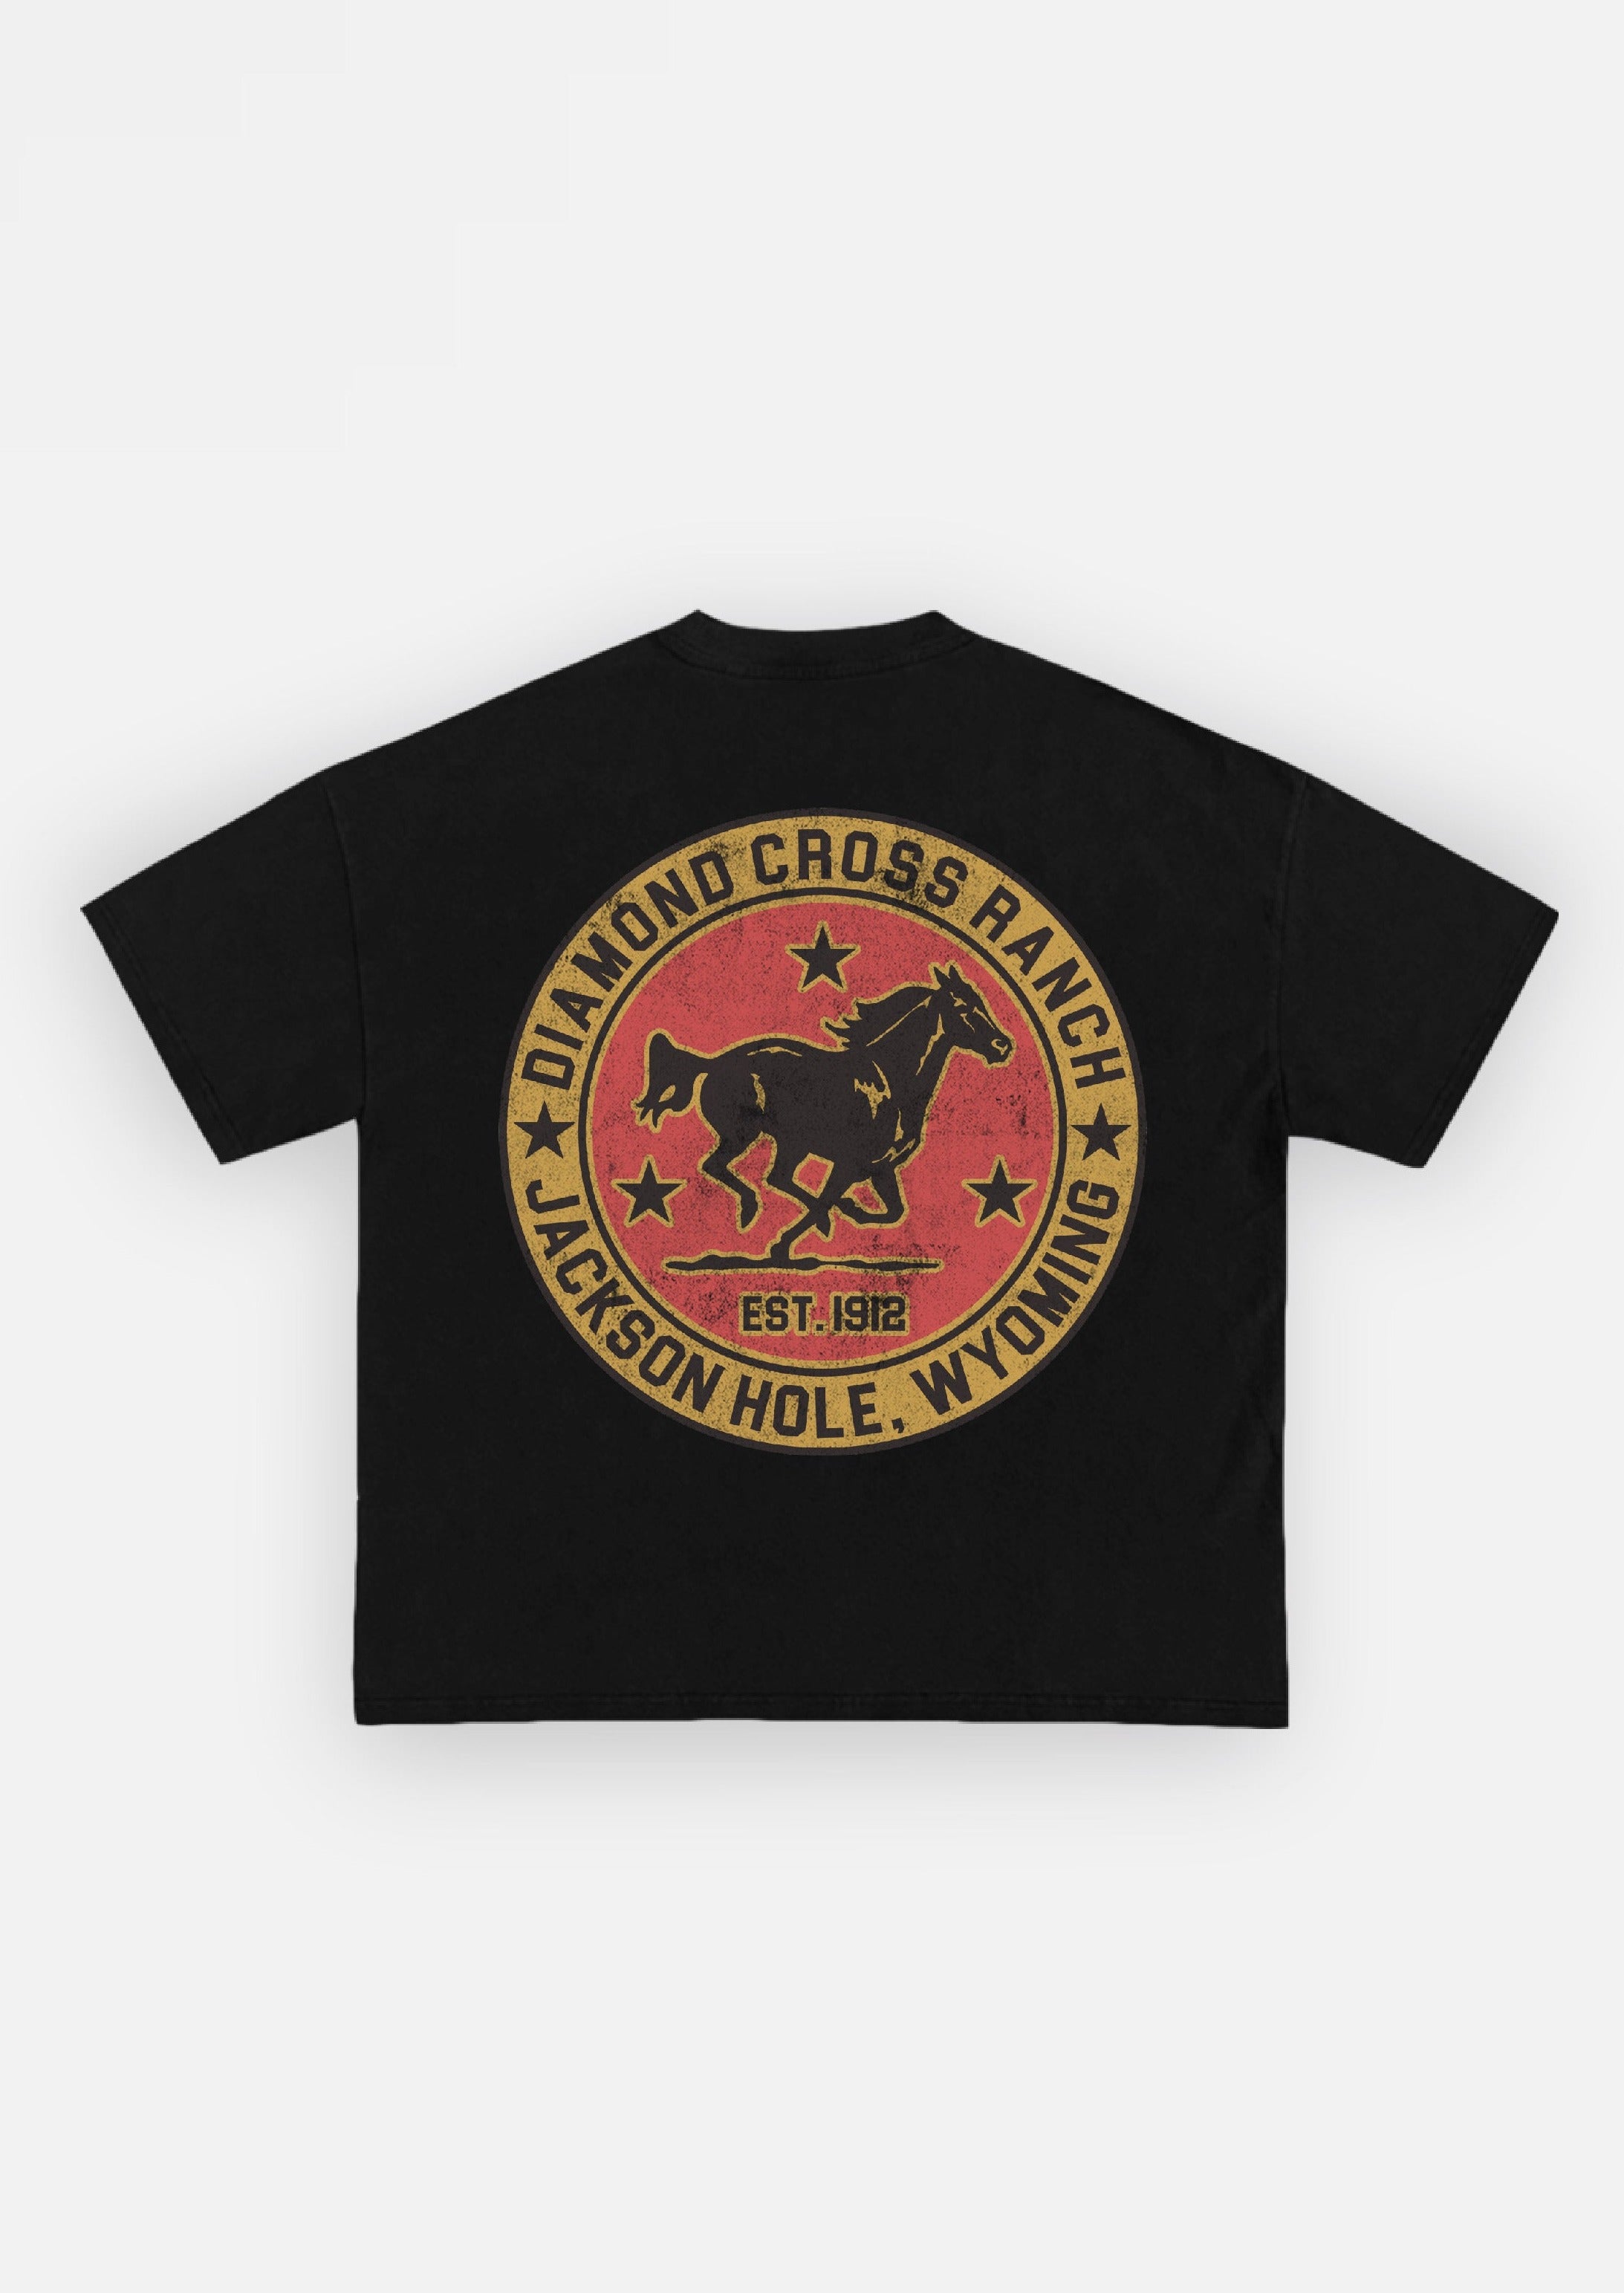 Diamond Cross Ranch Circle Horse Black T-Shirt